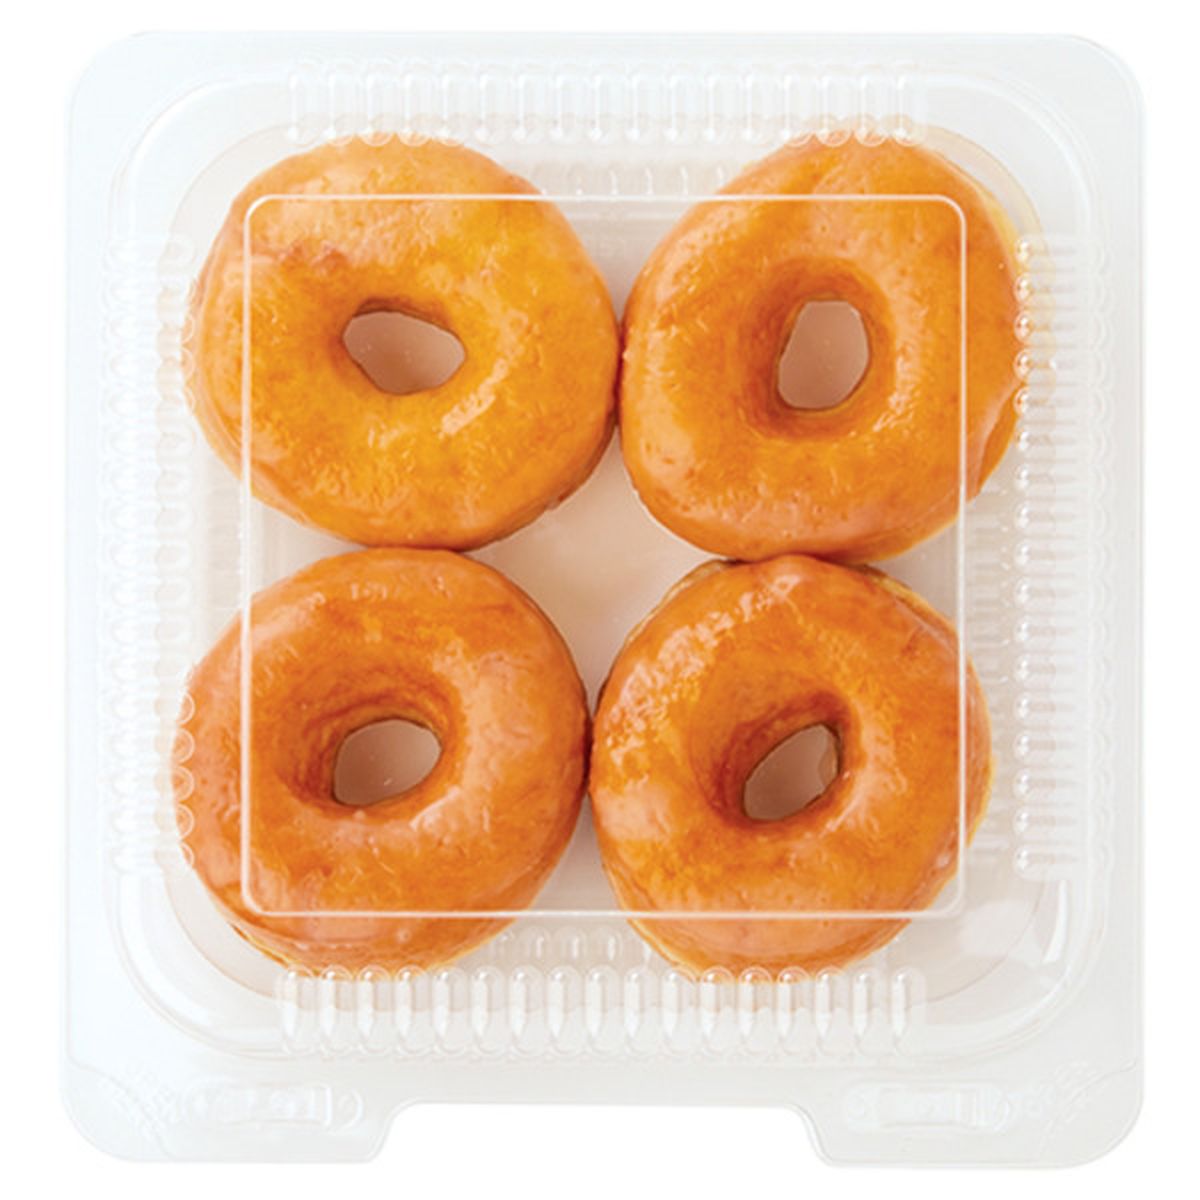 Calories in Wegmans Glazed Donuts 4 pk